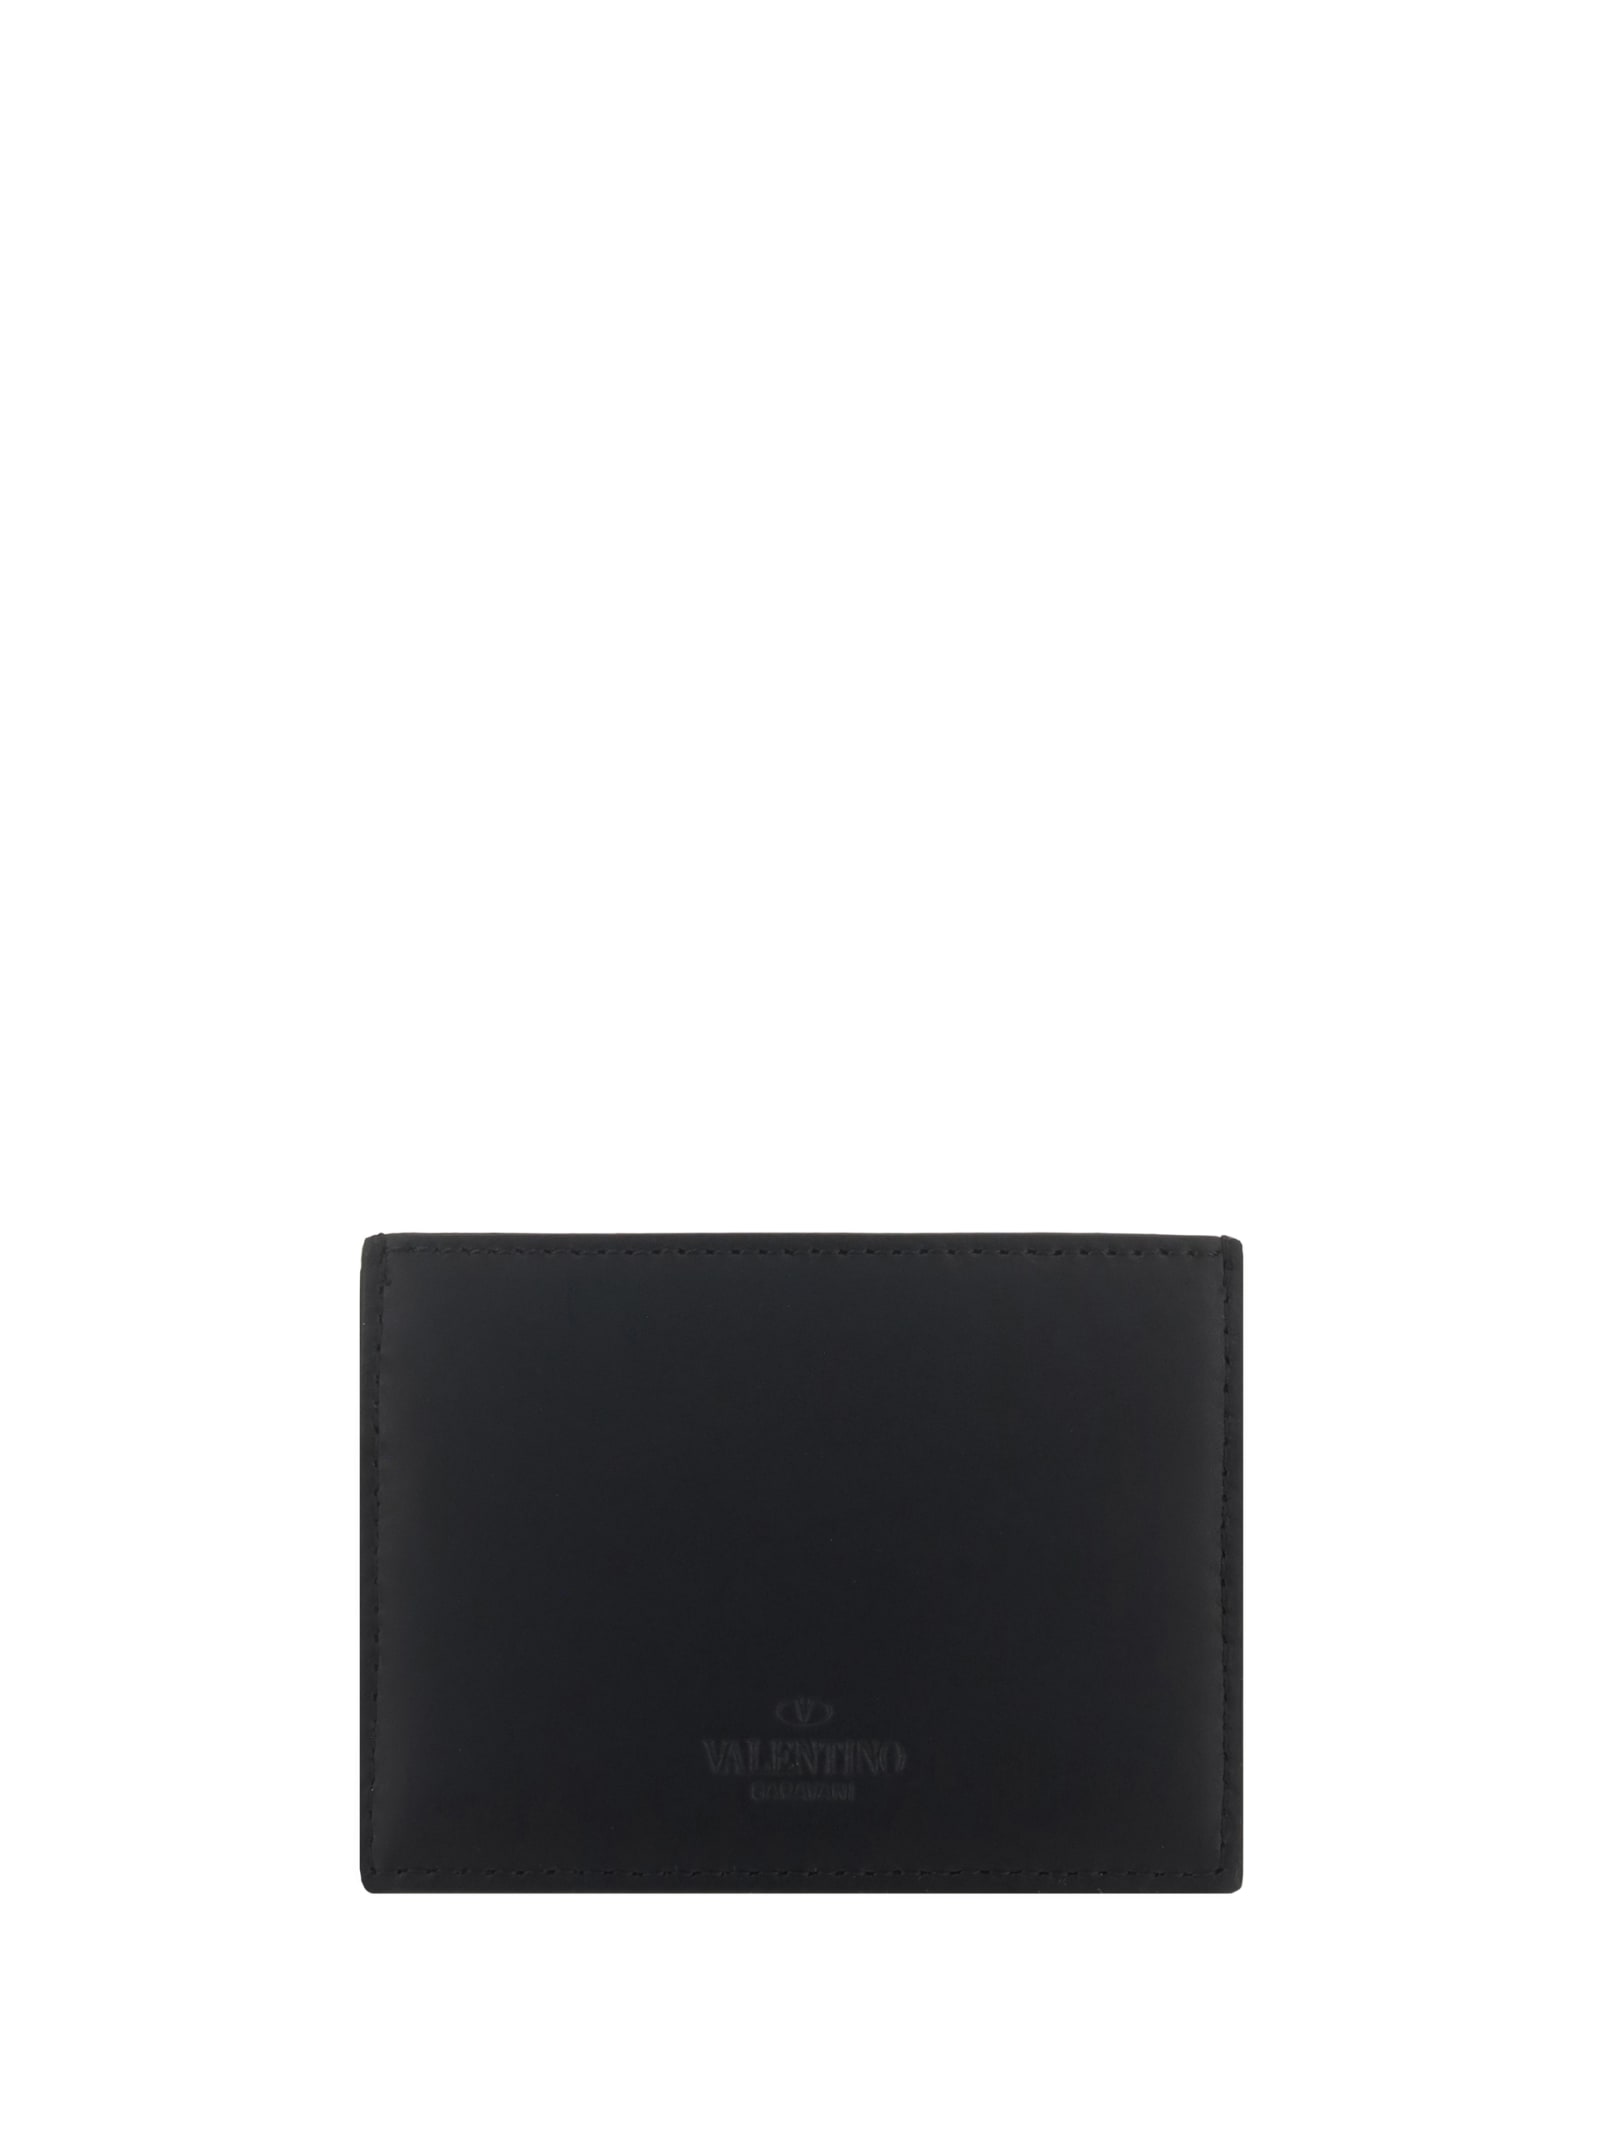 Shop Valentino Vtln Card Holder In Black